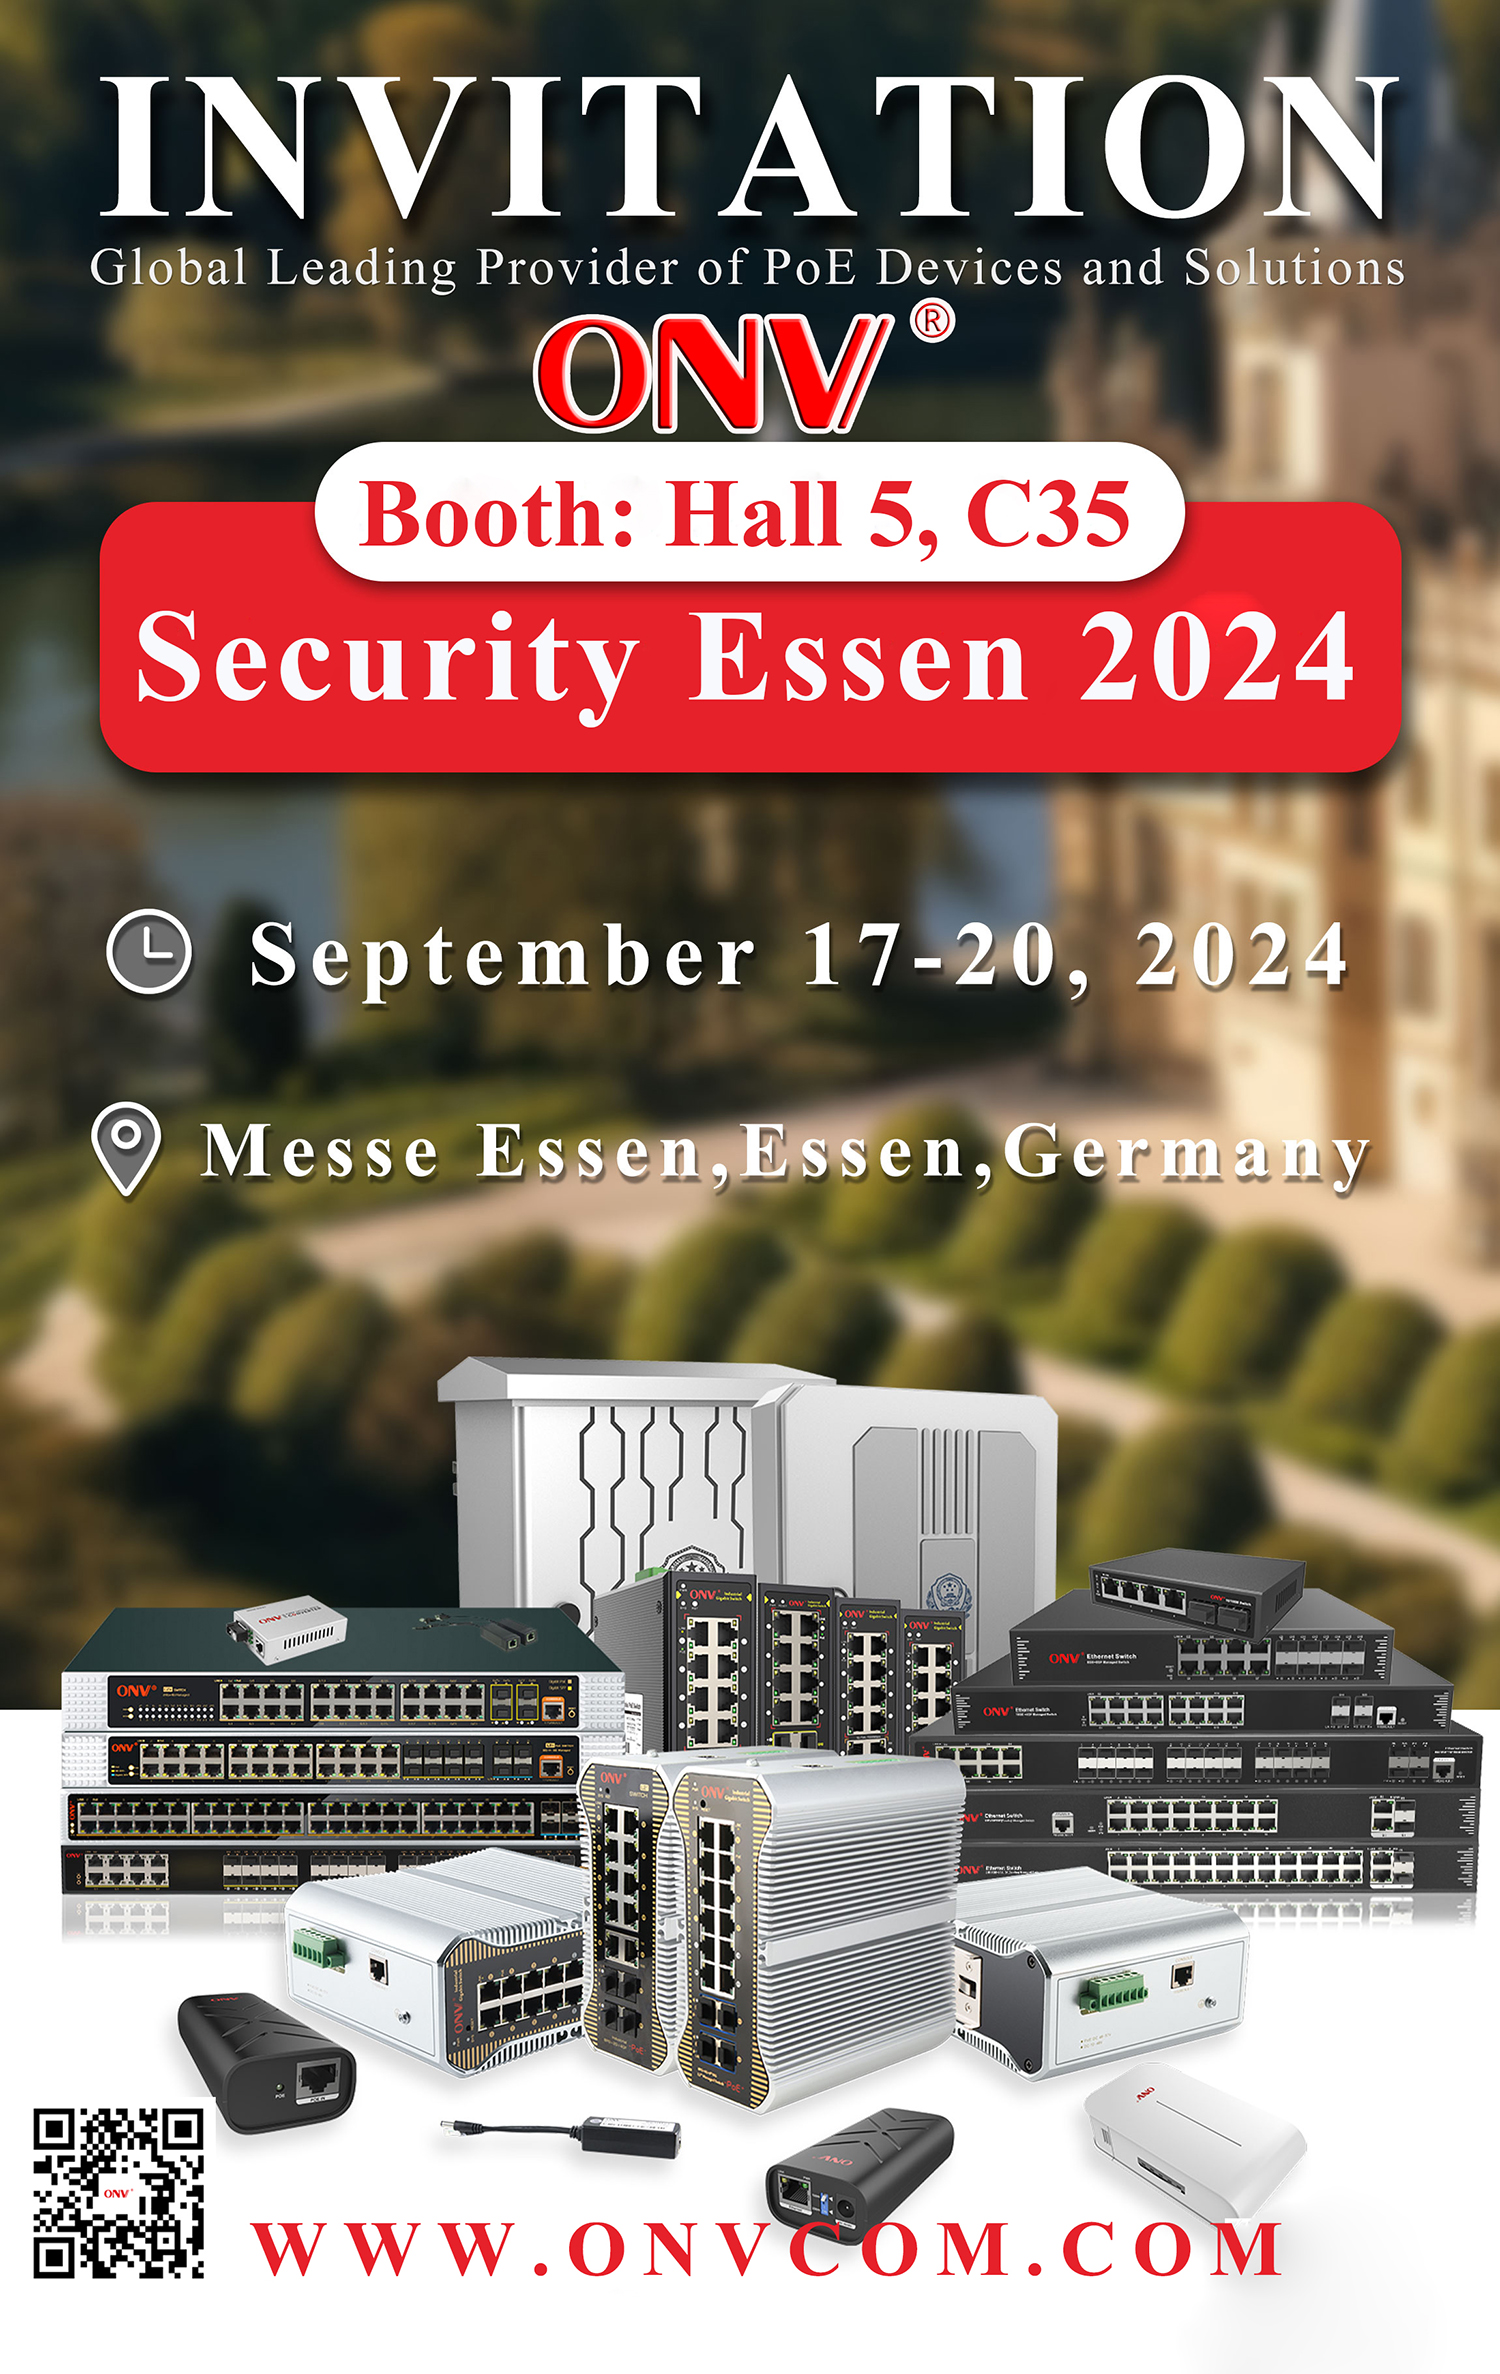 Security Essen 2024, Security Essen